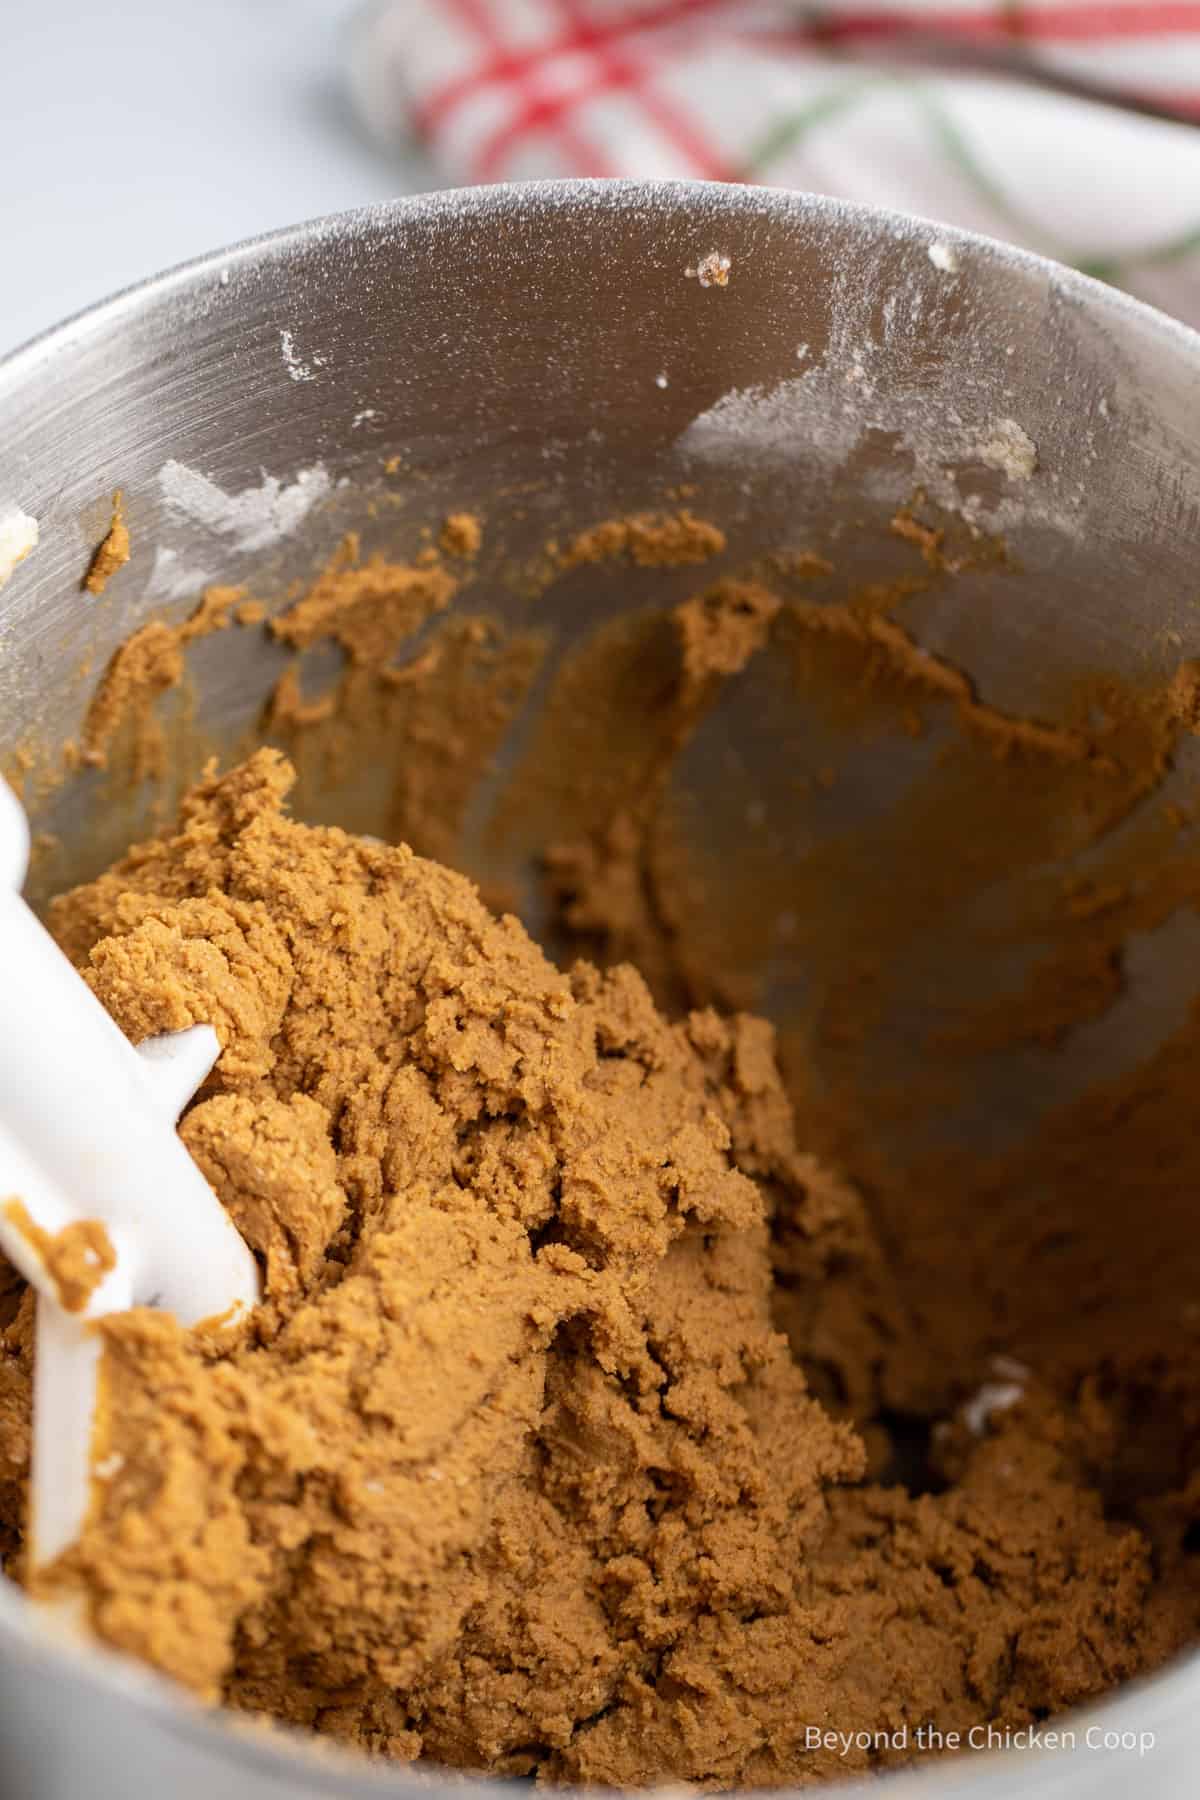 Mixing gingerbread dough in a mixing bowl. 